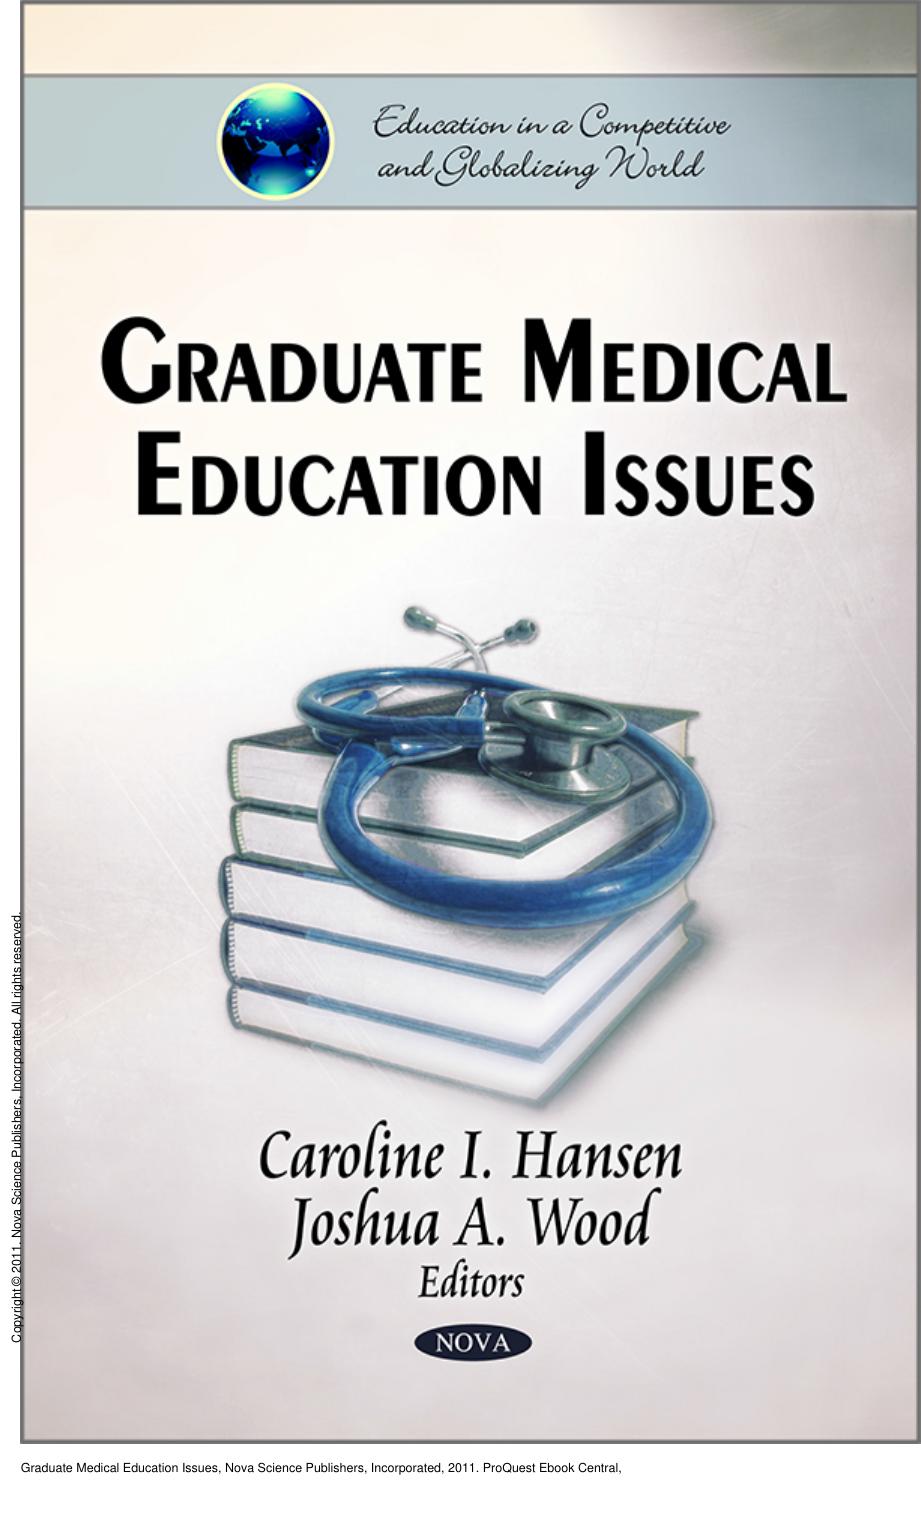 Graduate Medical Education Issues by Caroline I. Hansen; Joshua A. Wood